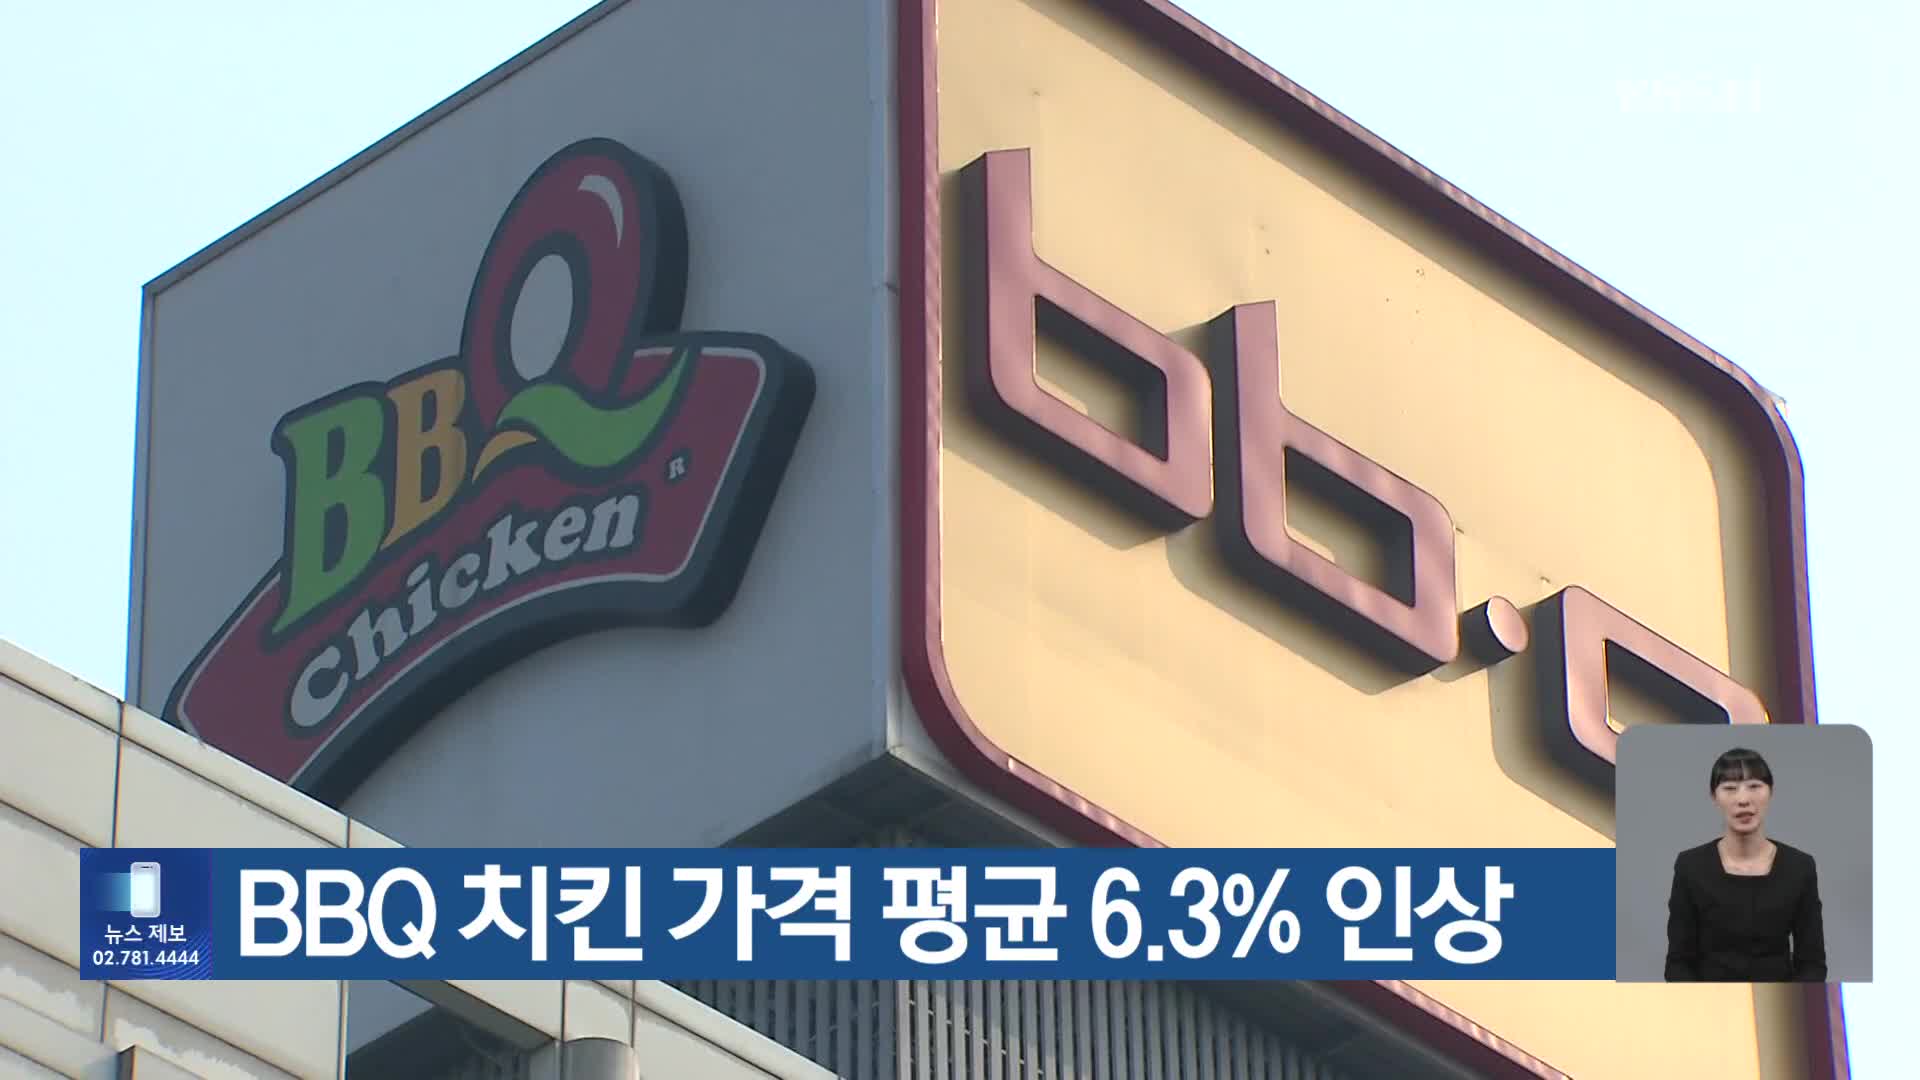 BBQ 치킨 가격 평균 6.3% 인상